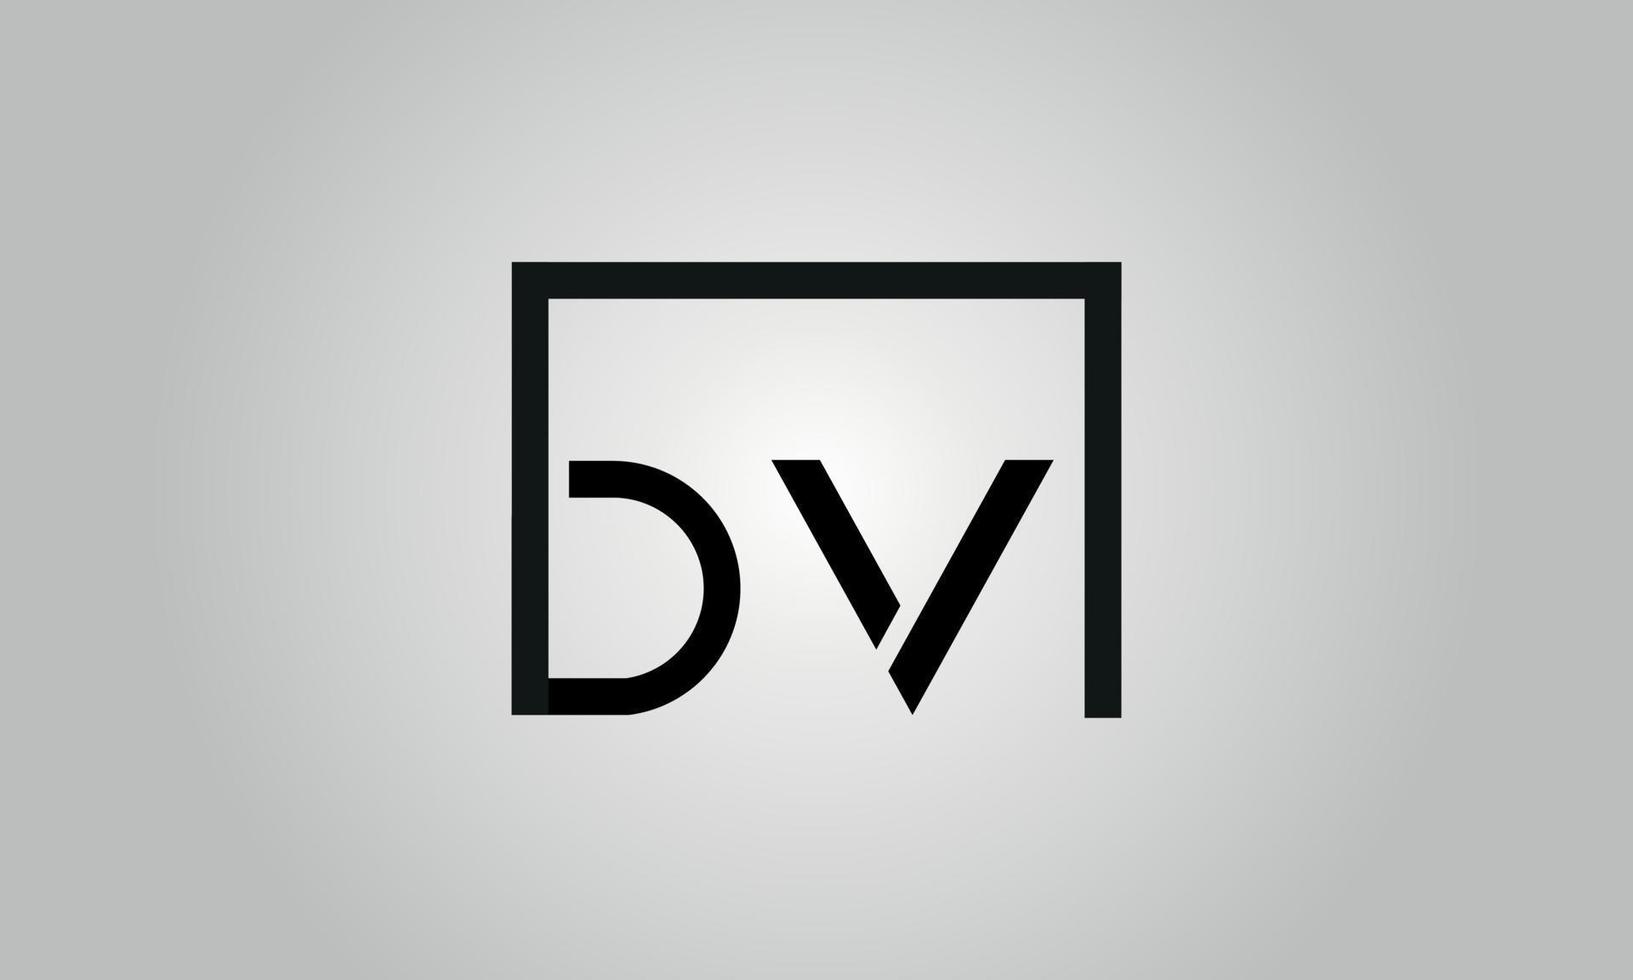 Letter DV logo design. DV logo with square shape in black colors vector free vector template.